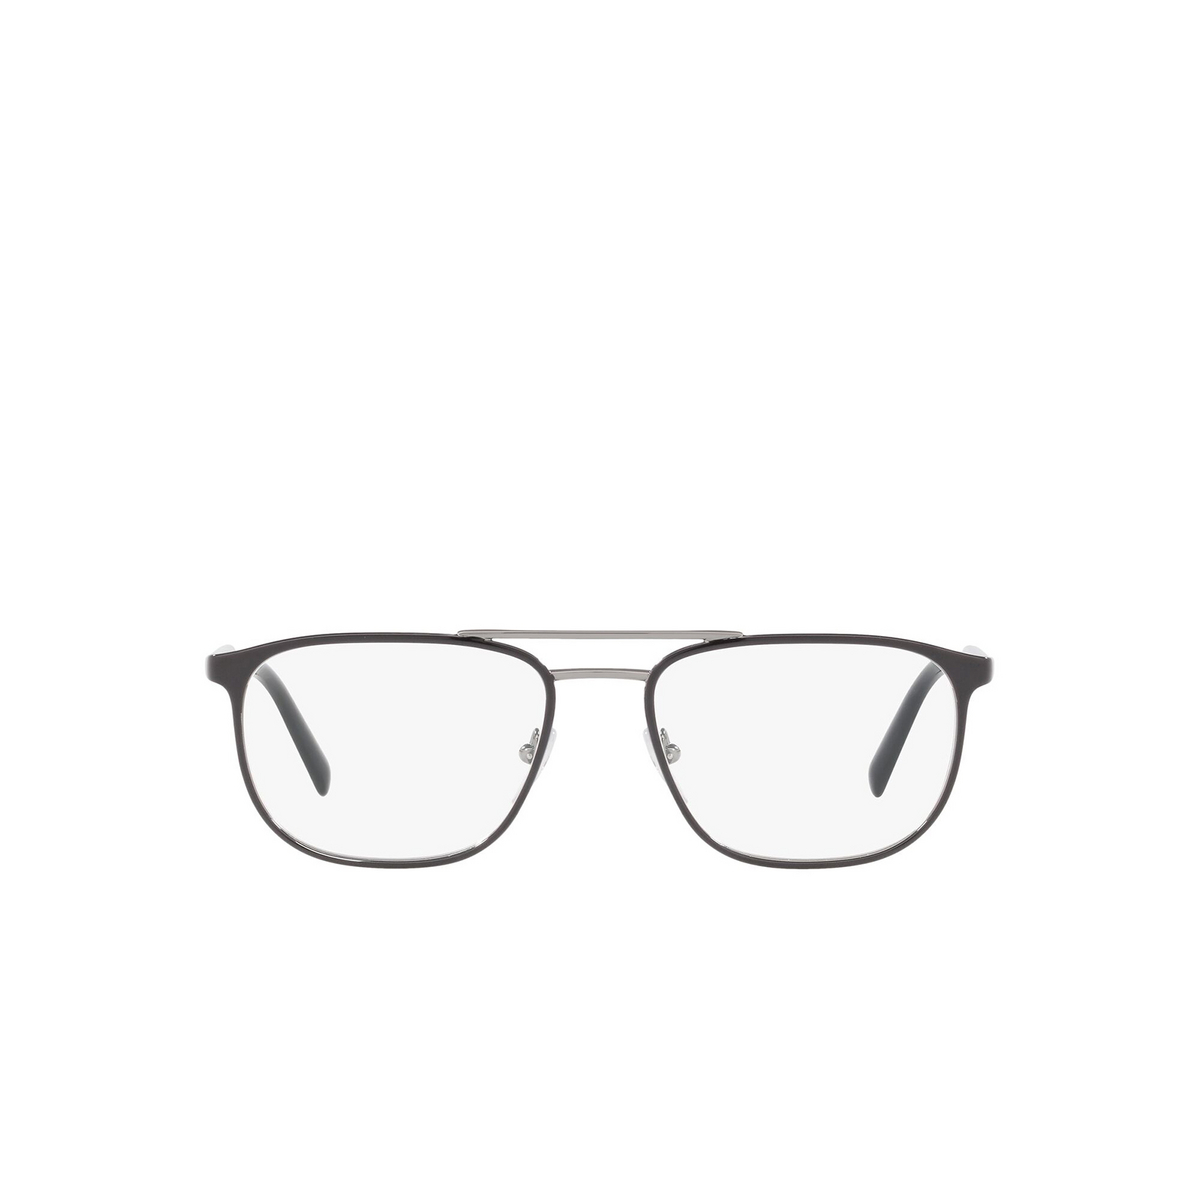 Prada CONCEPTUAL Eyeglasses YDC1O1 Top Black on Gunmetal - front view